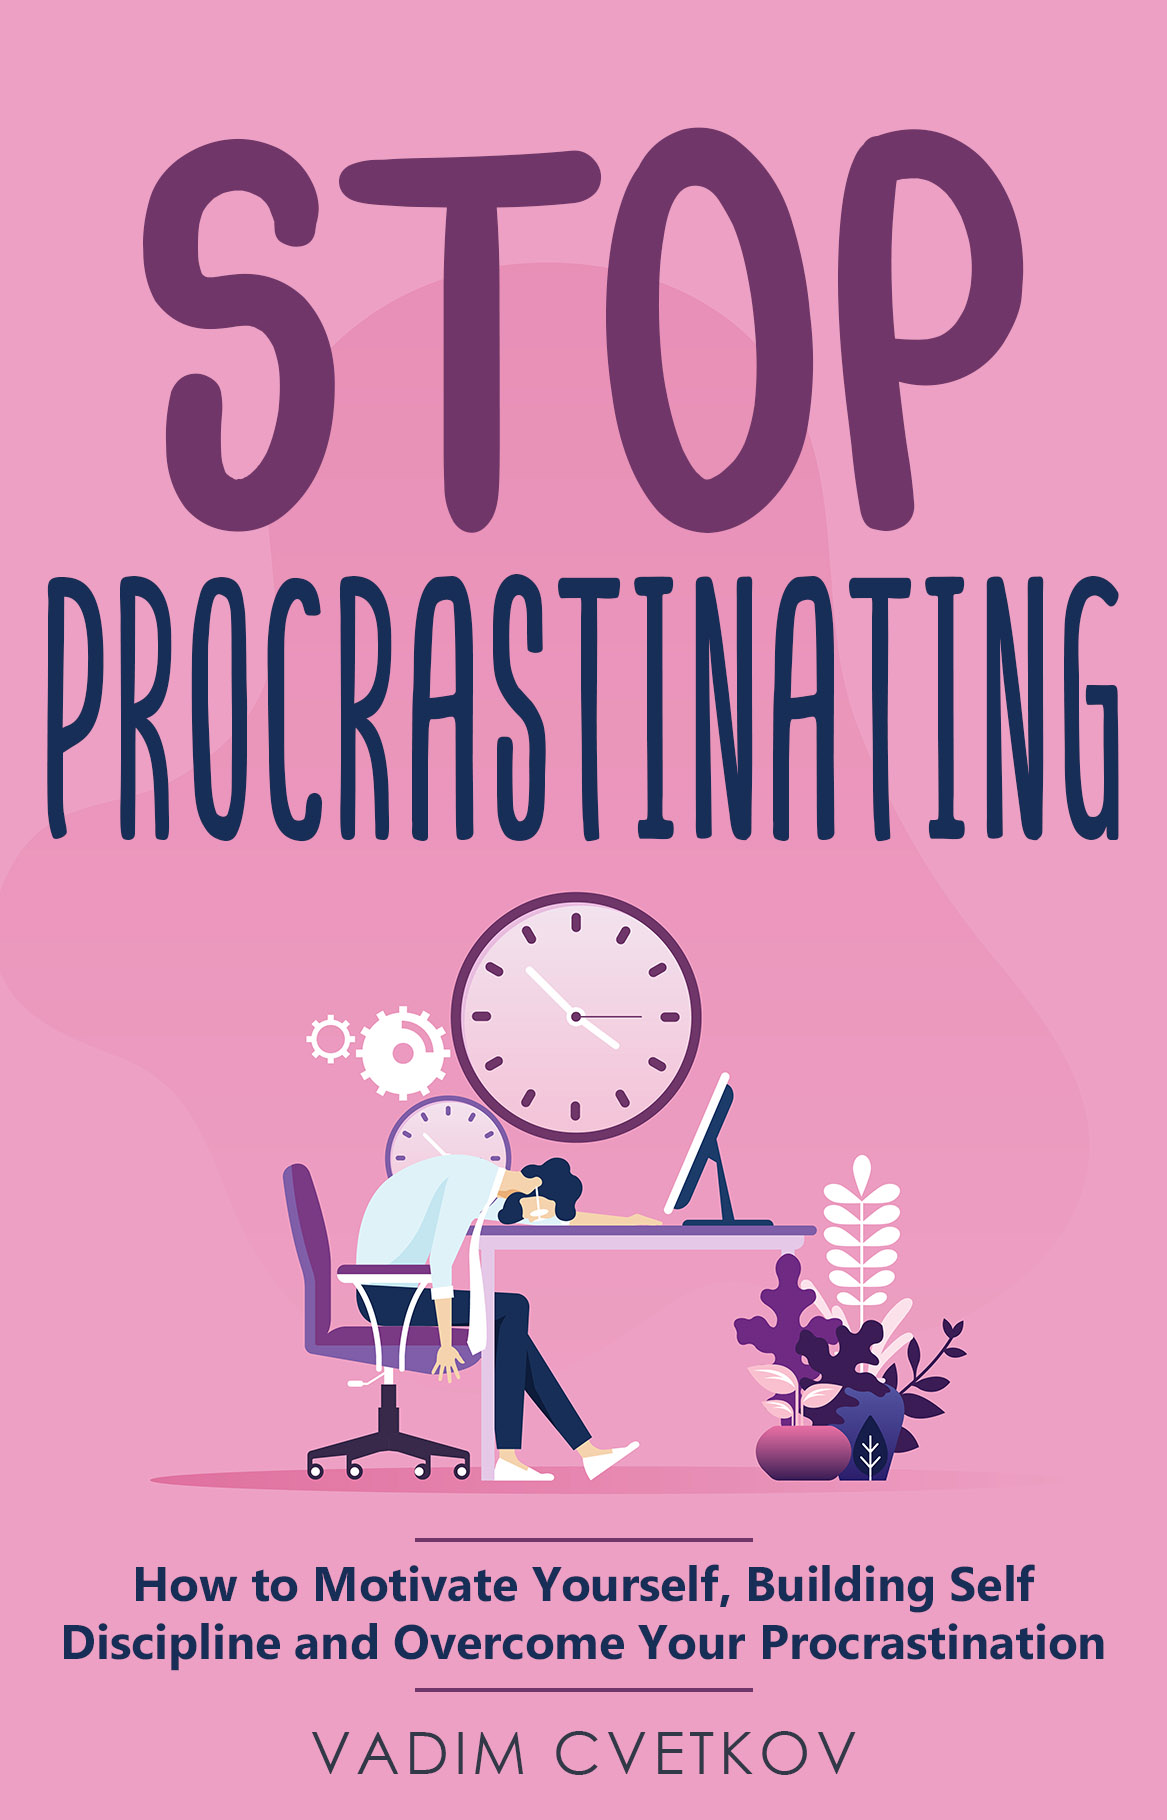 FREE: Stop Procrastinating: How to Motivate Yourself, Building Self Discipline and Overcome Your Procrastination by Vadim Cvetkov